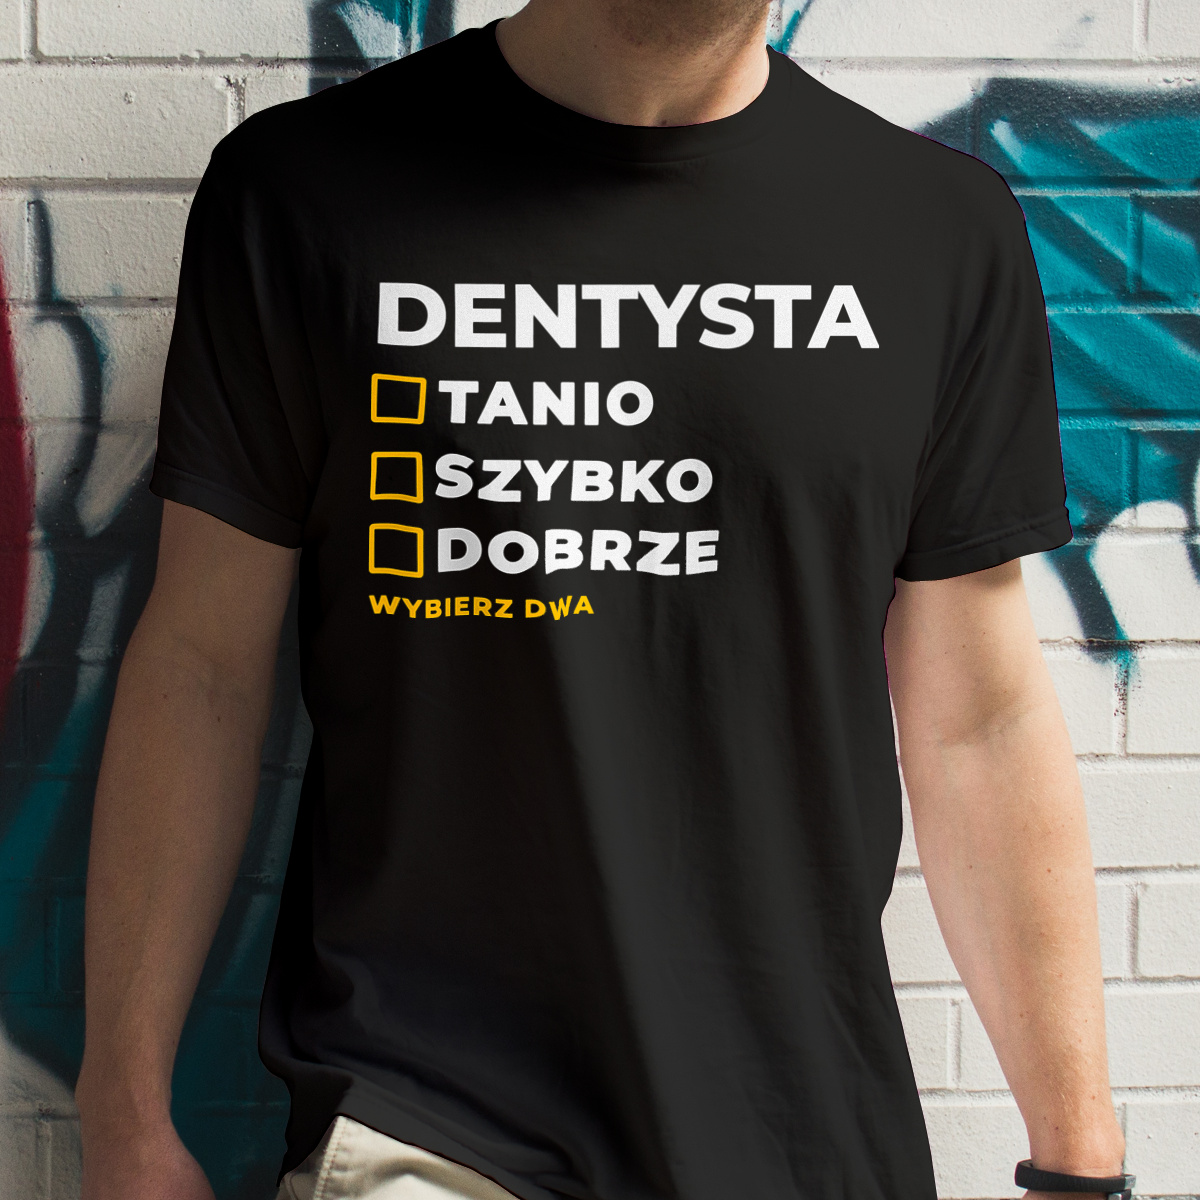 Szybko Tanio Dobrze Dentysta - Męska Koszulka Czarna